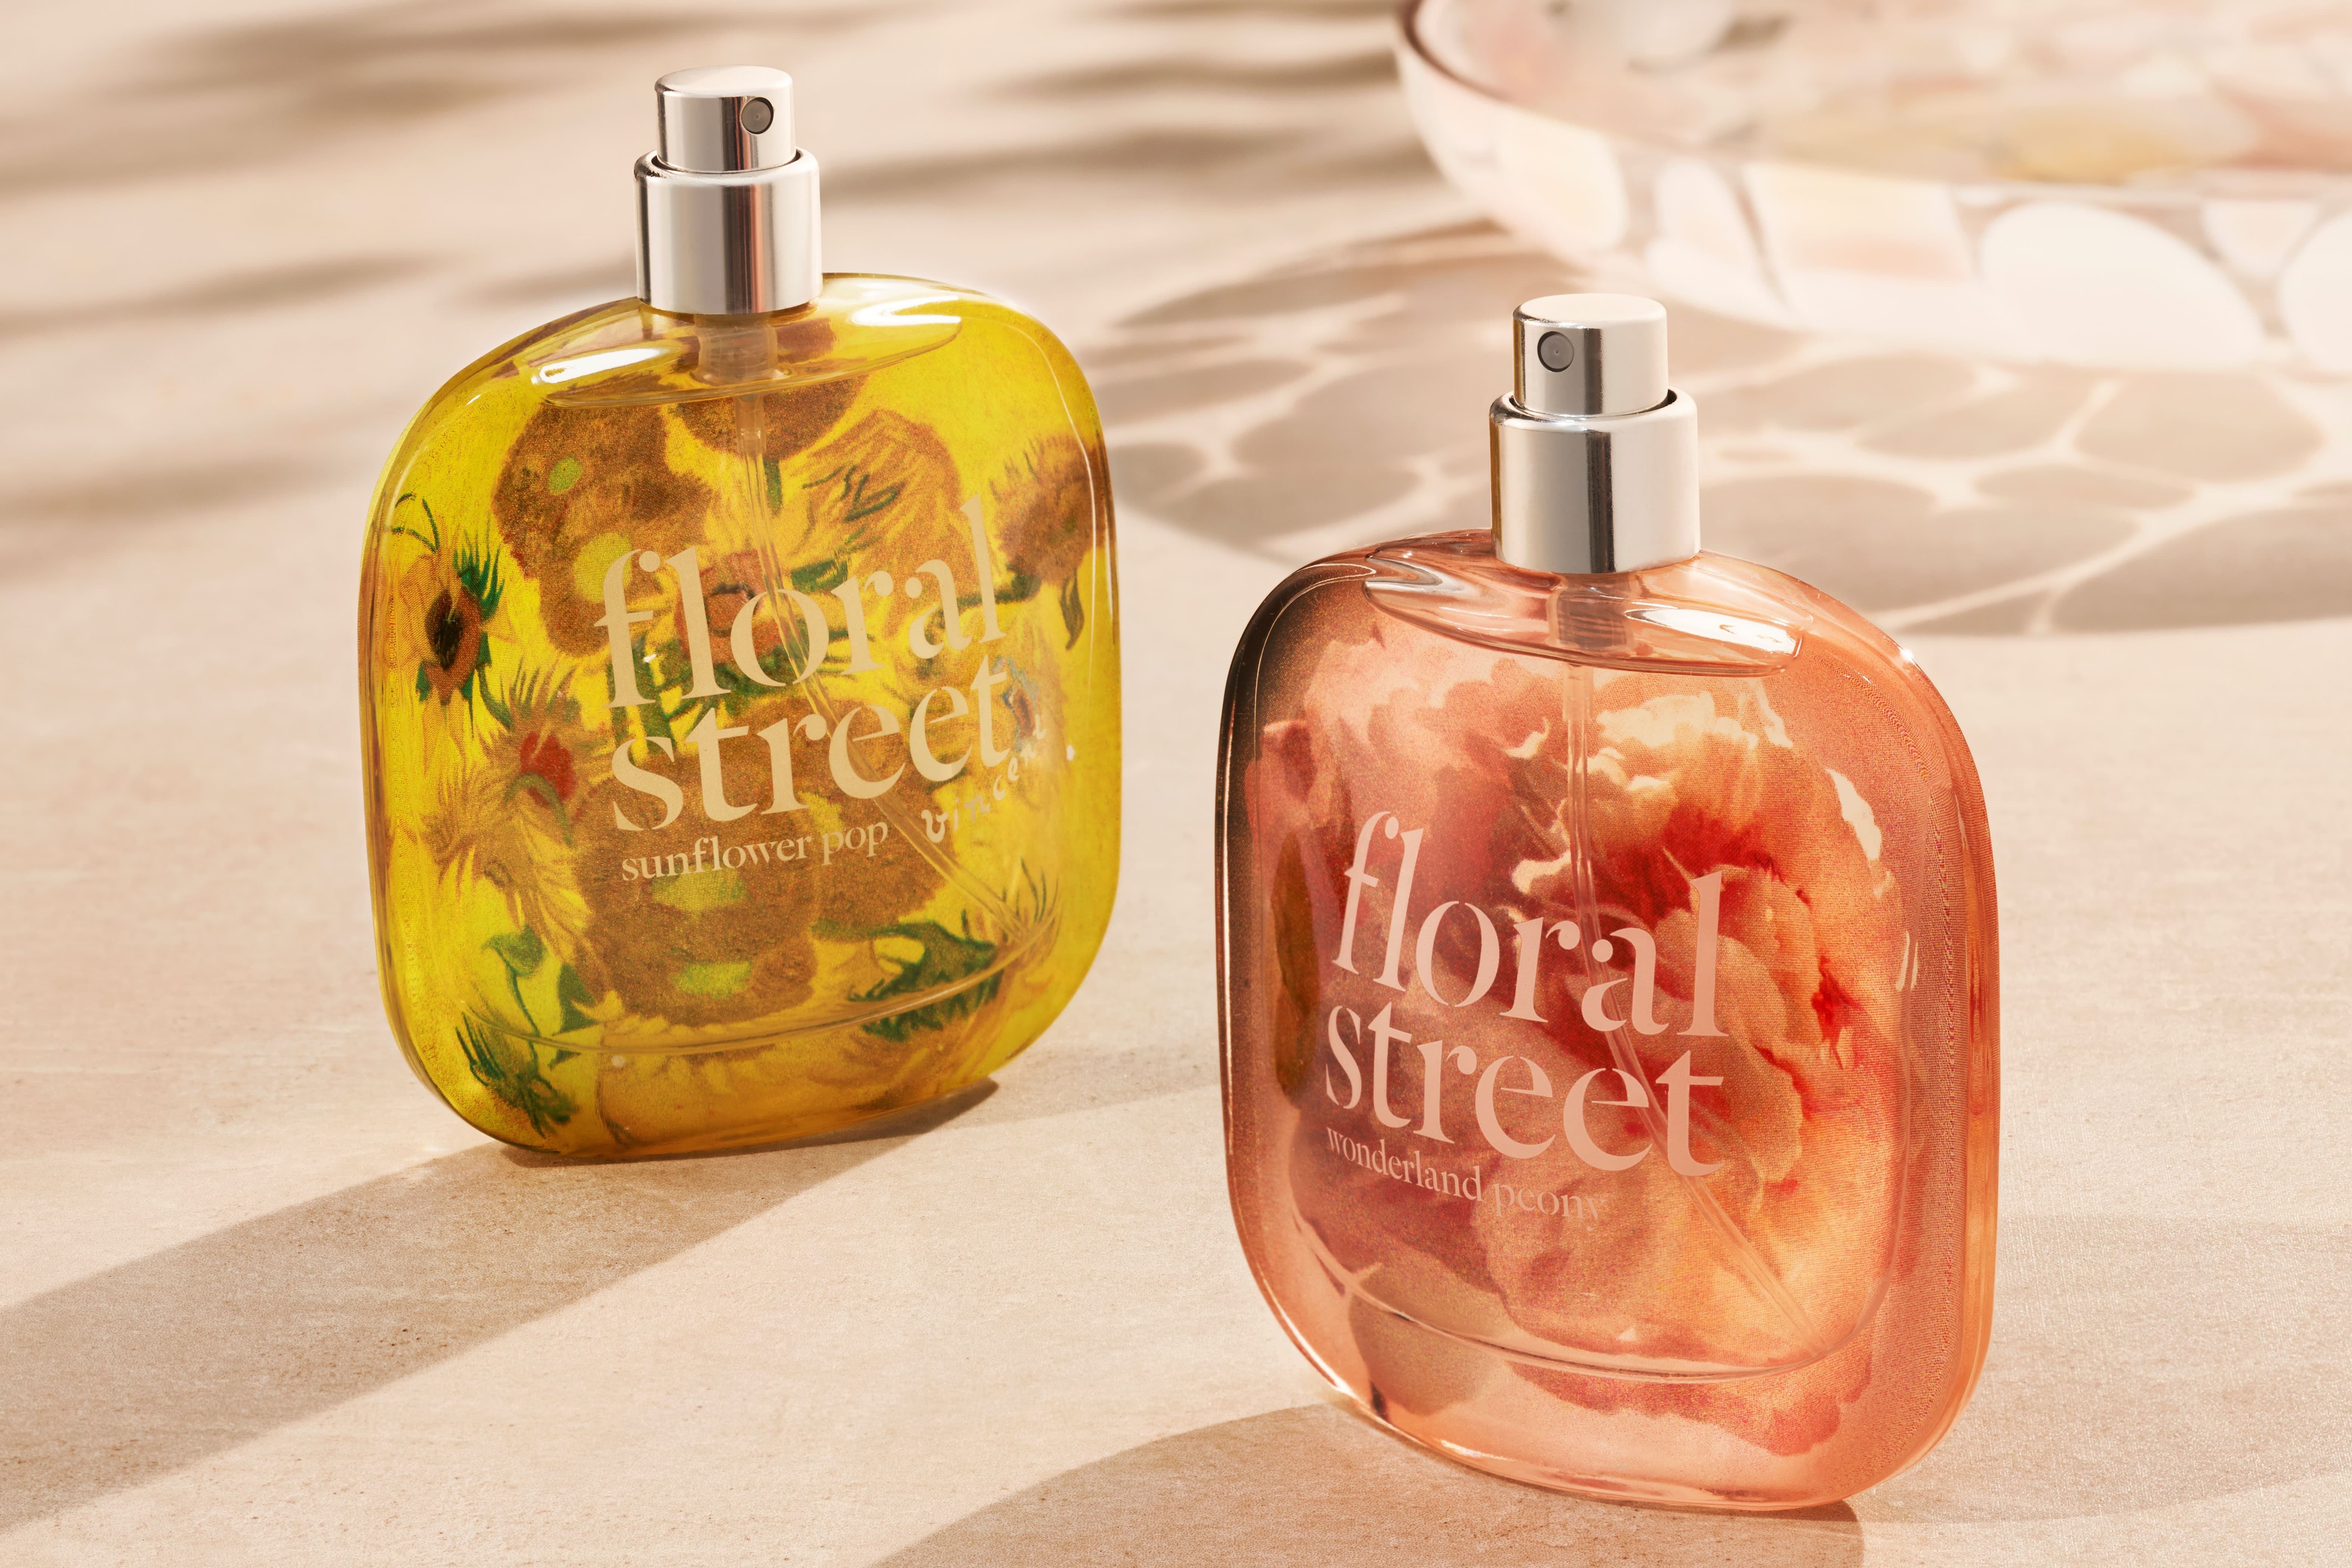 Best Floral Street Perfumes | Space NK